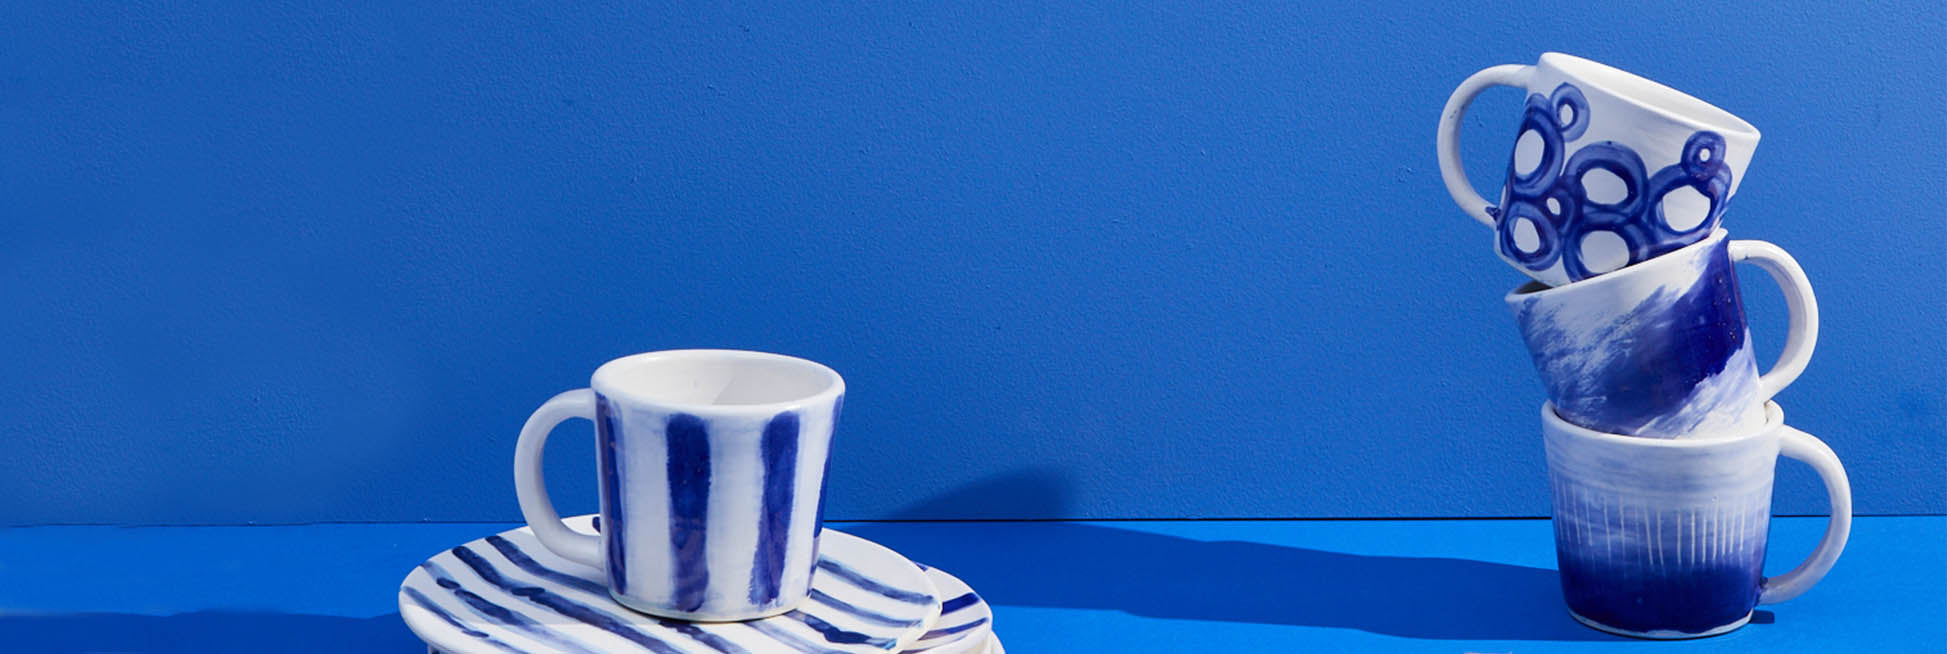 Blue painted mugs and dinnerware